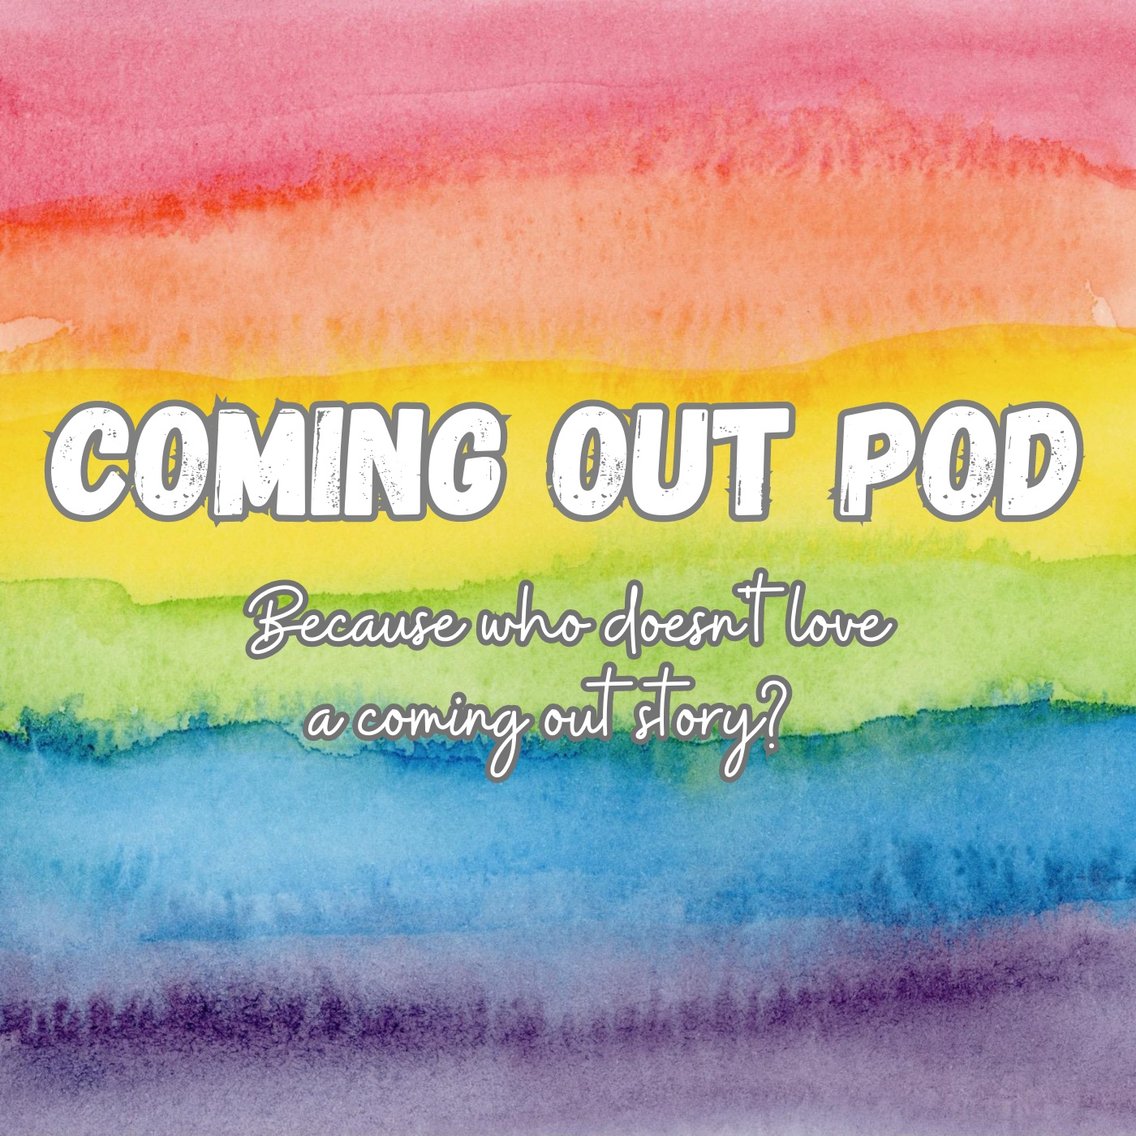 Coming Out Pod - immagine di copertina
